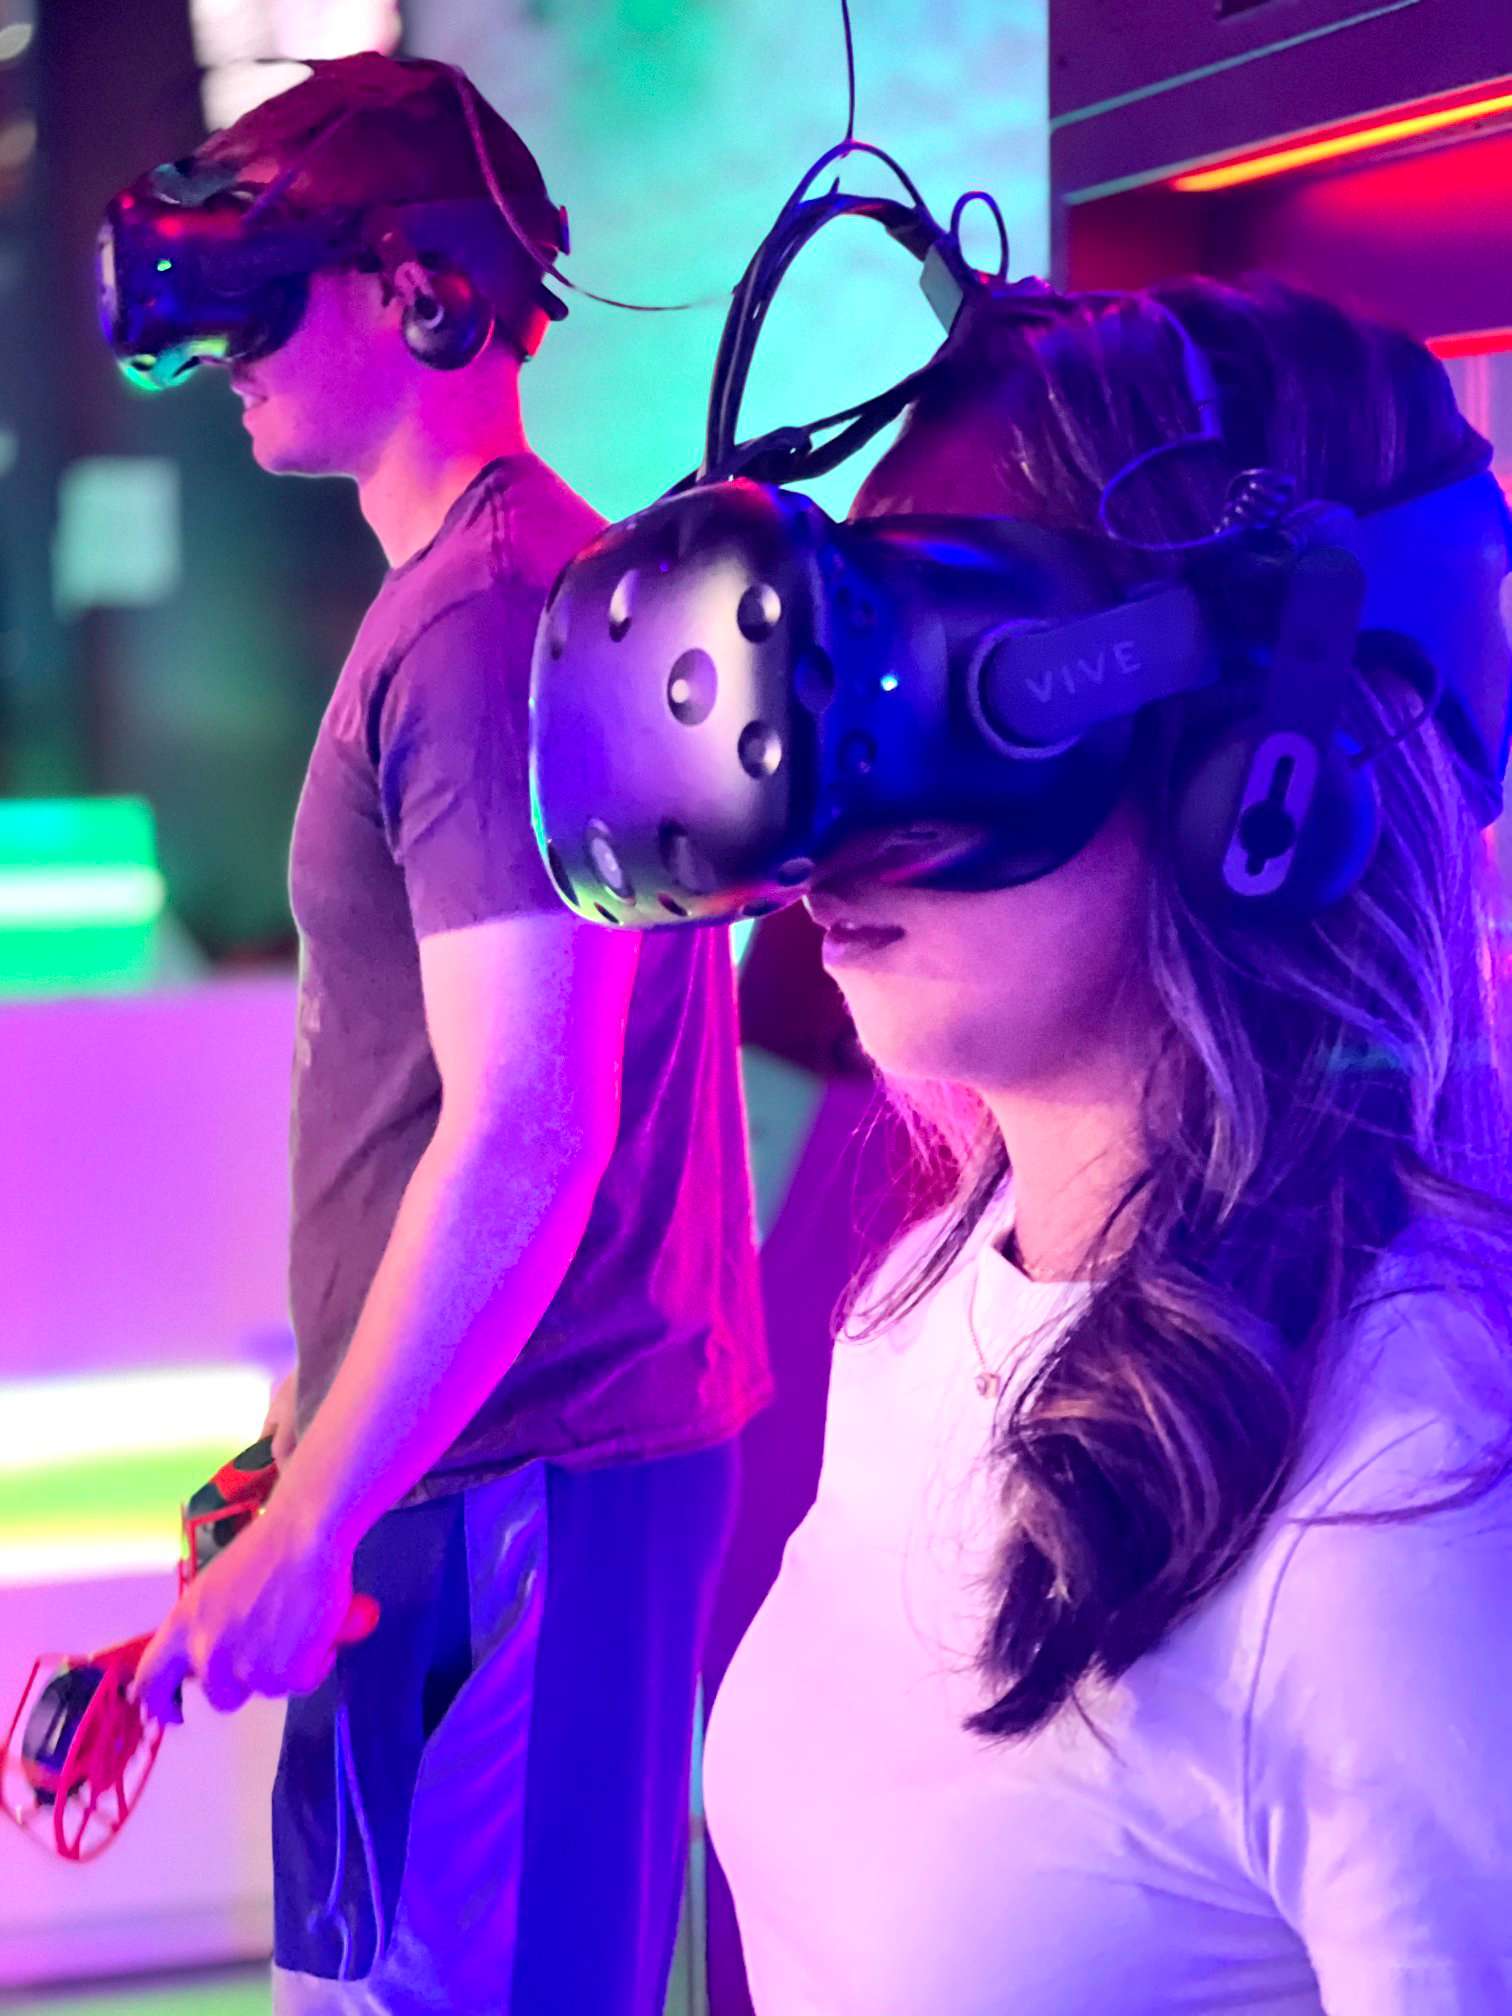 VR player 1 Virtual Reality Arcade